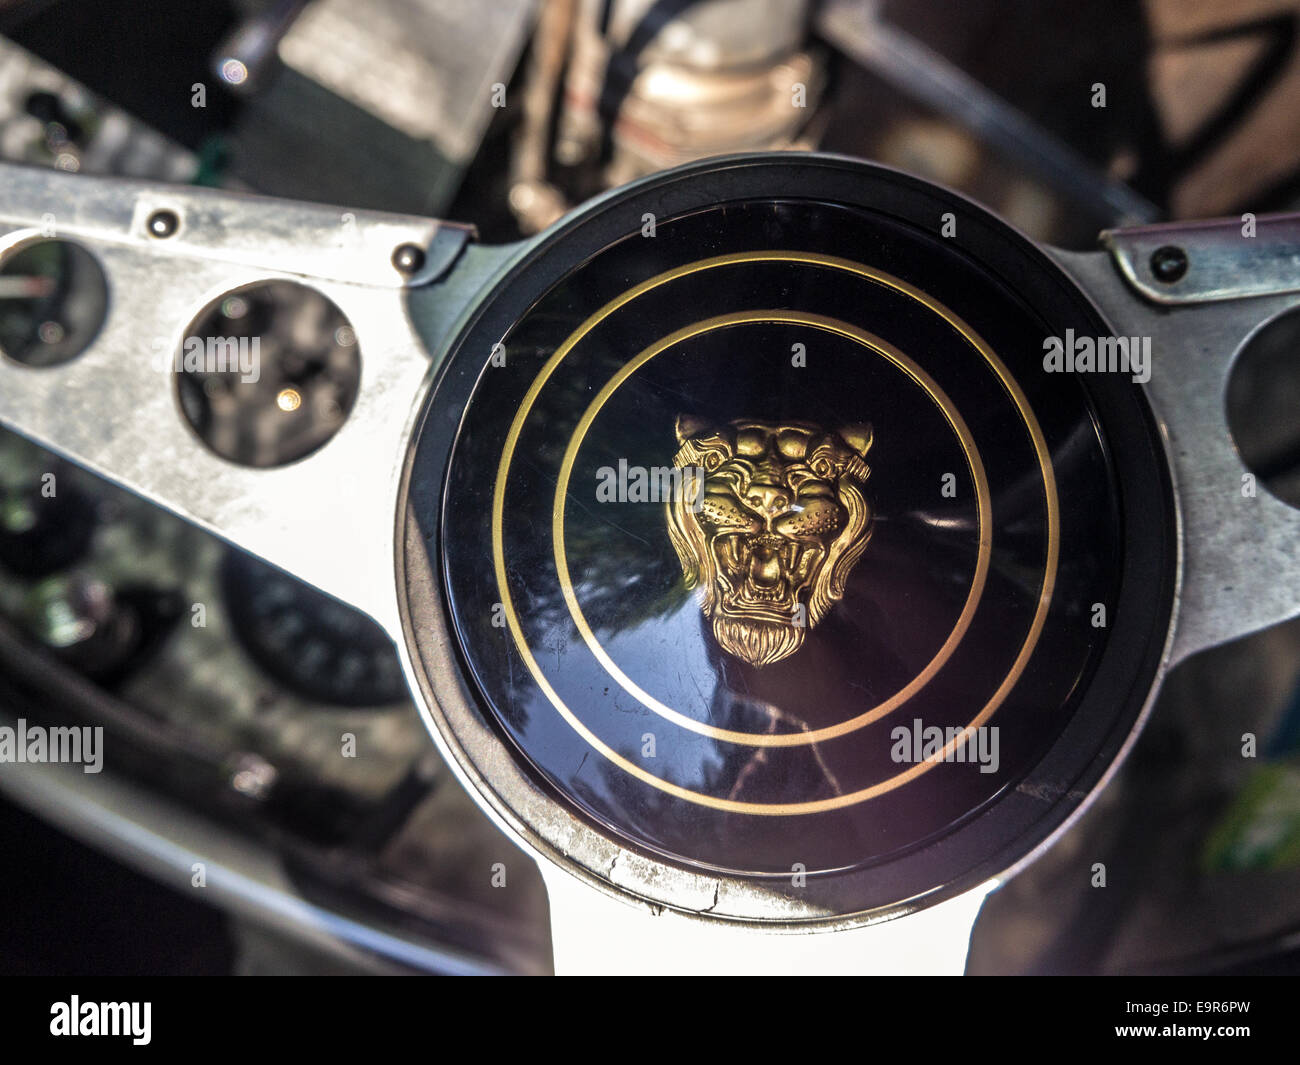 A classic Jaguar logo on a racing car steering wheel Stock Photo